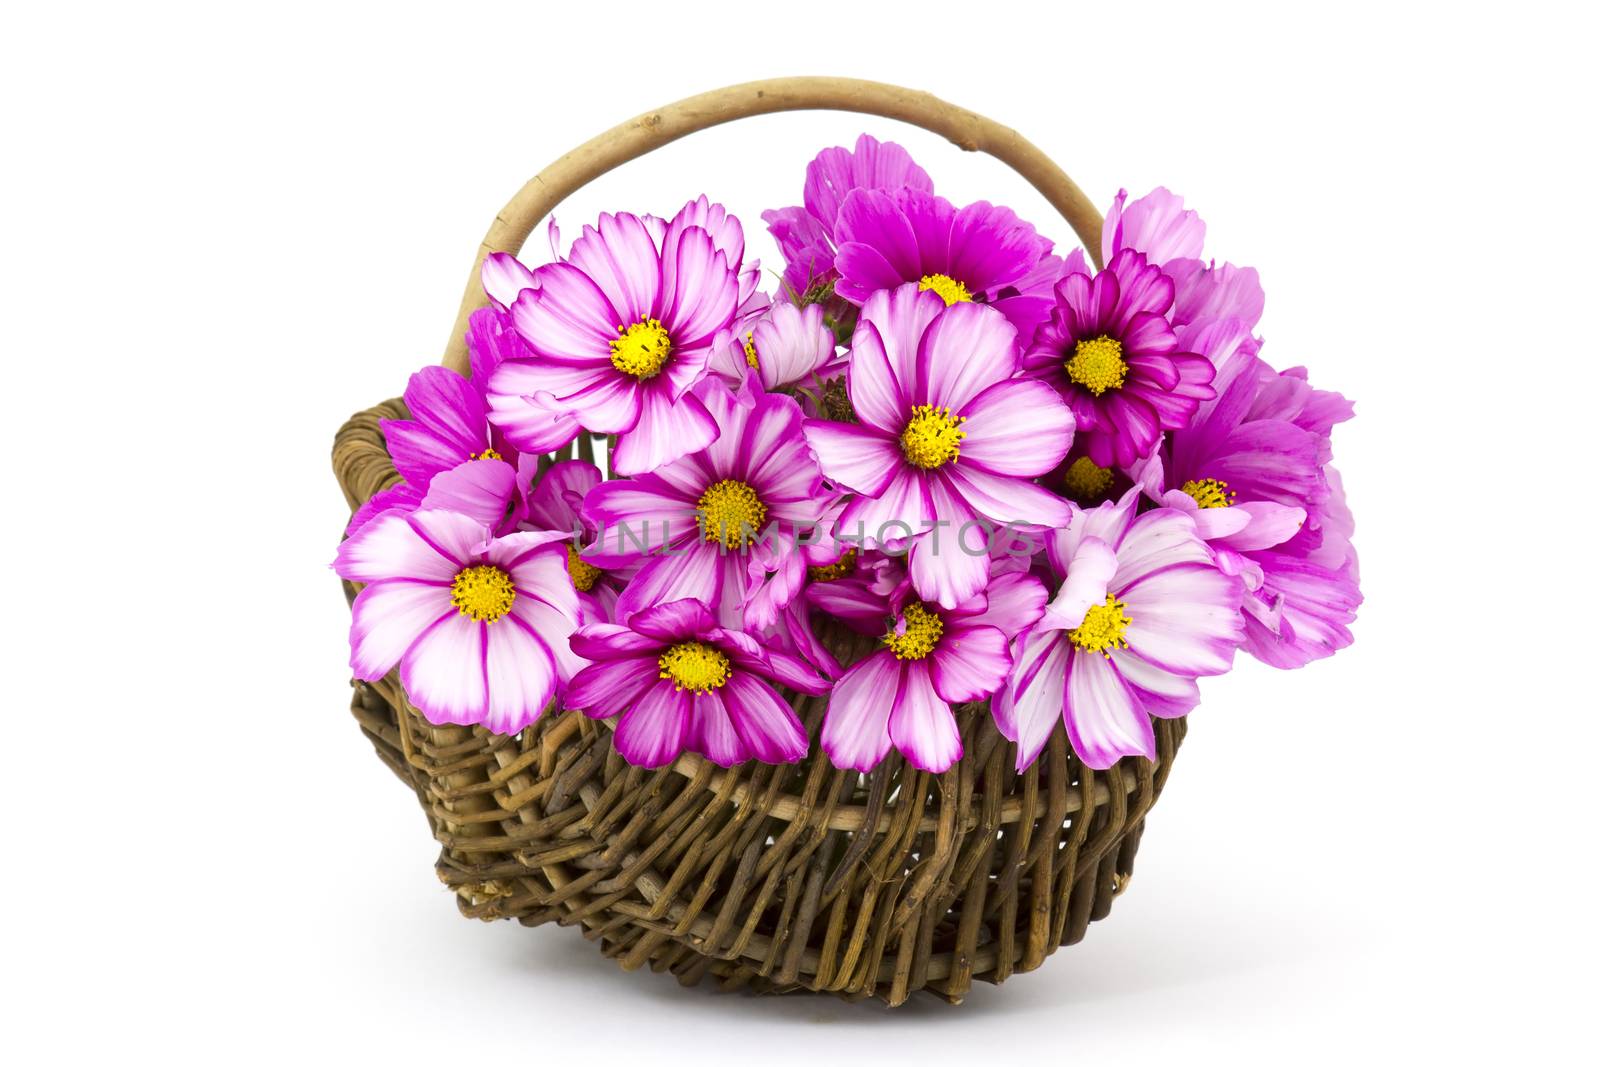 cosmos flowers in a basket  by miradrozdowski